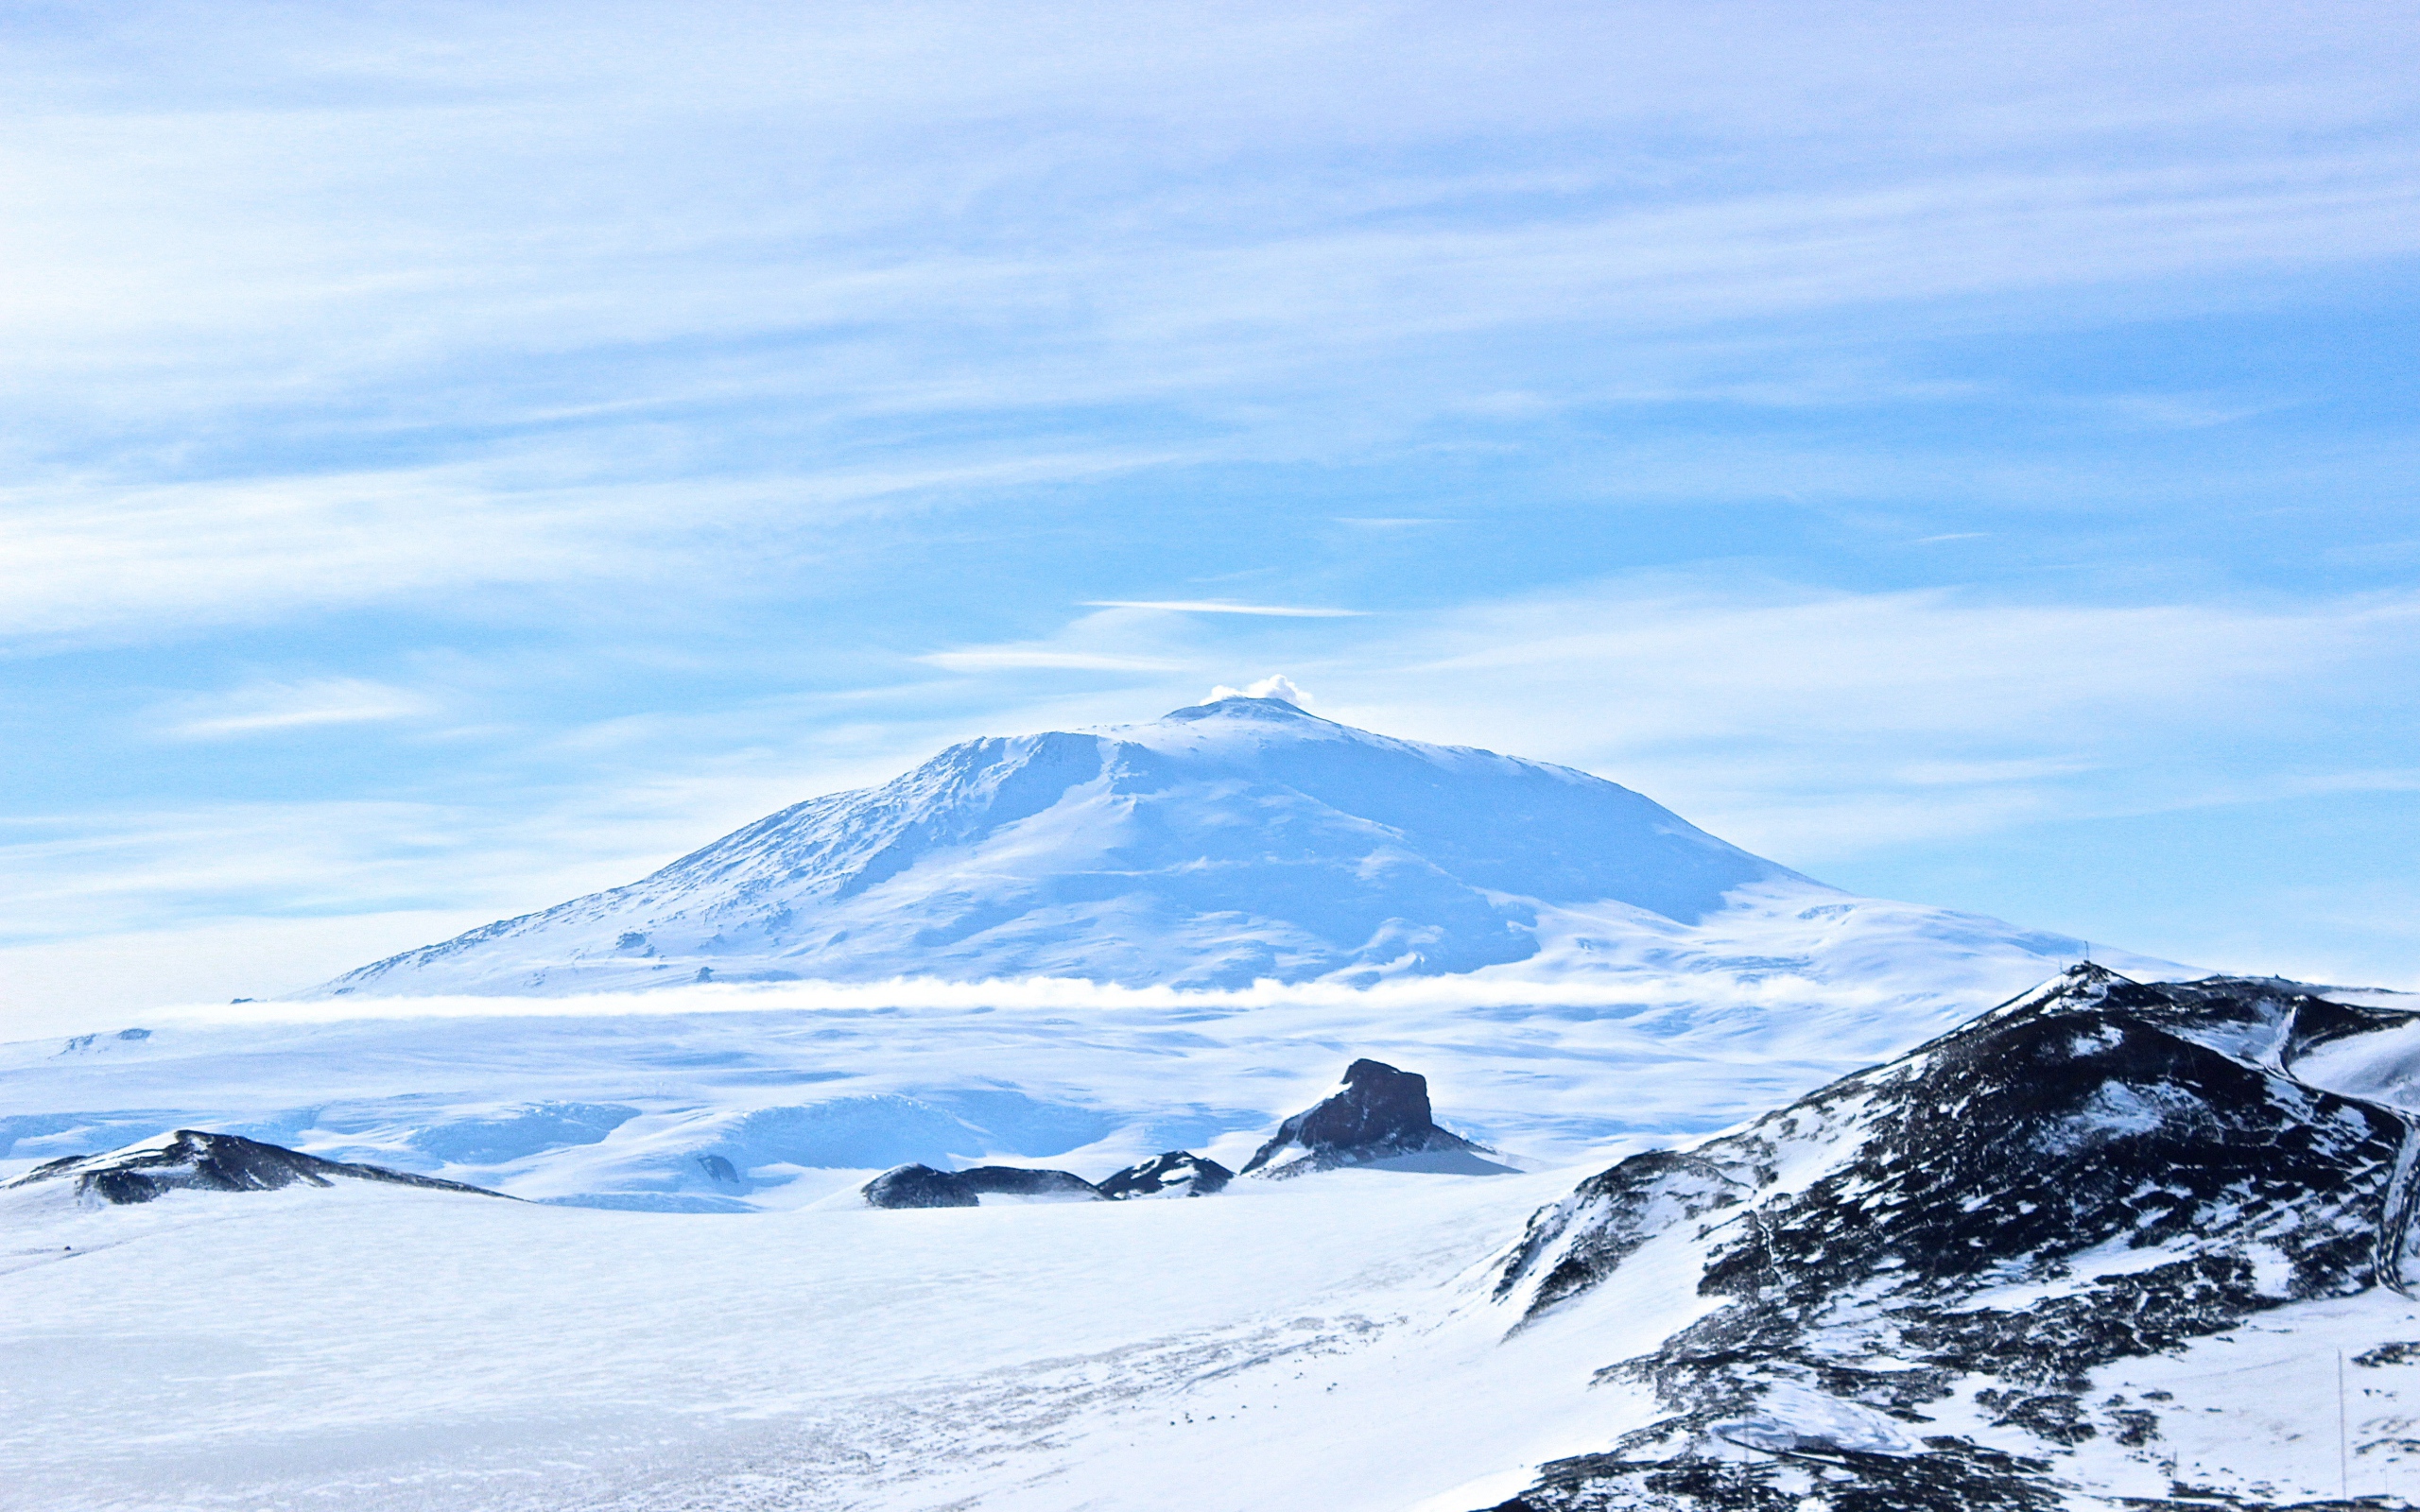 Заснеженный вулкан Эребус, Антарктида